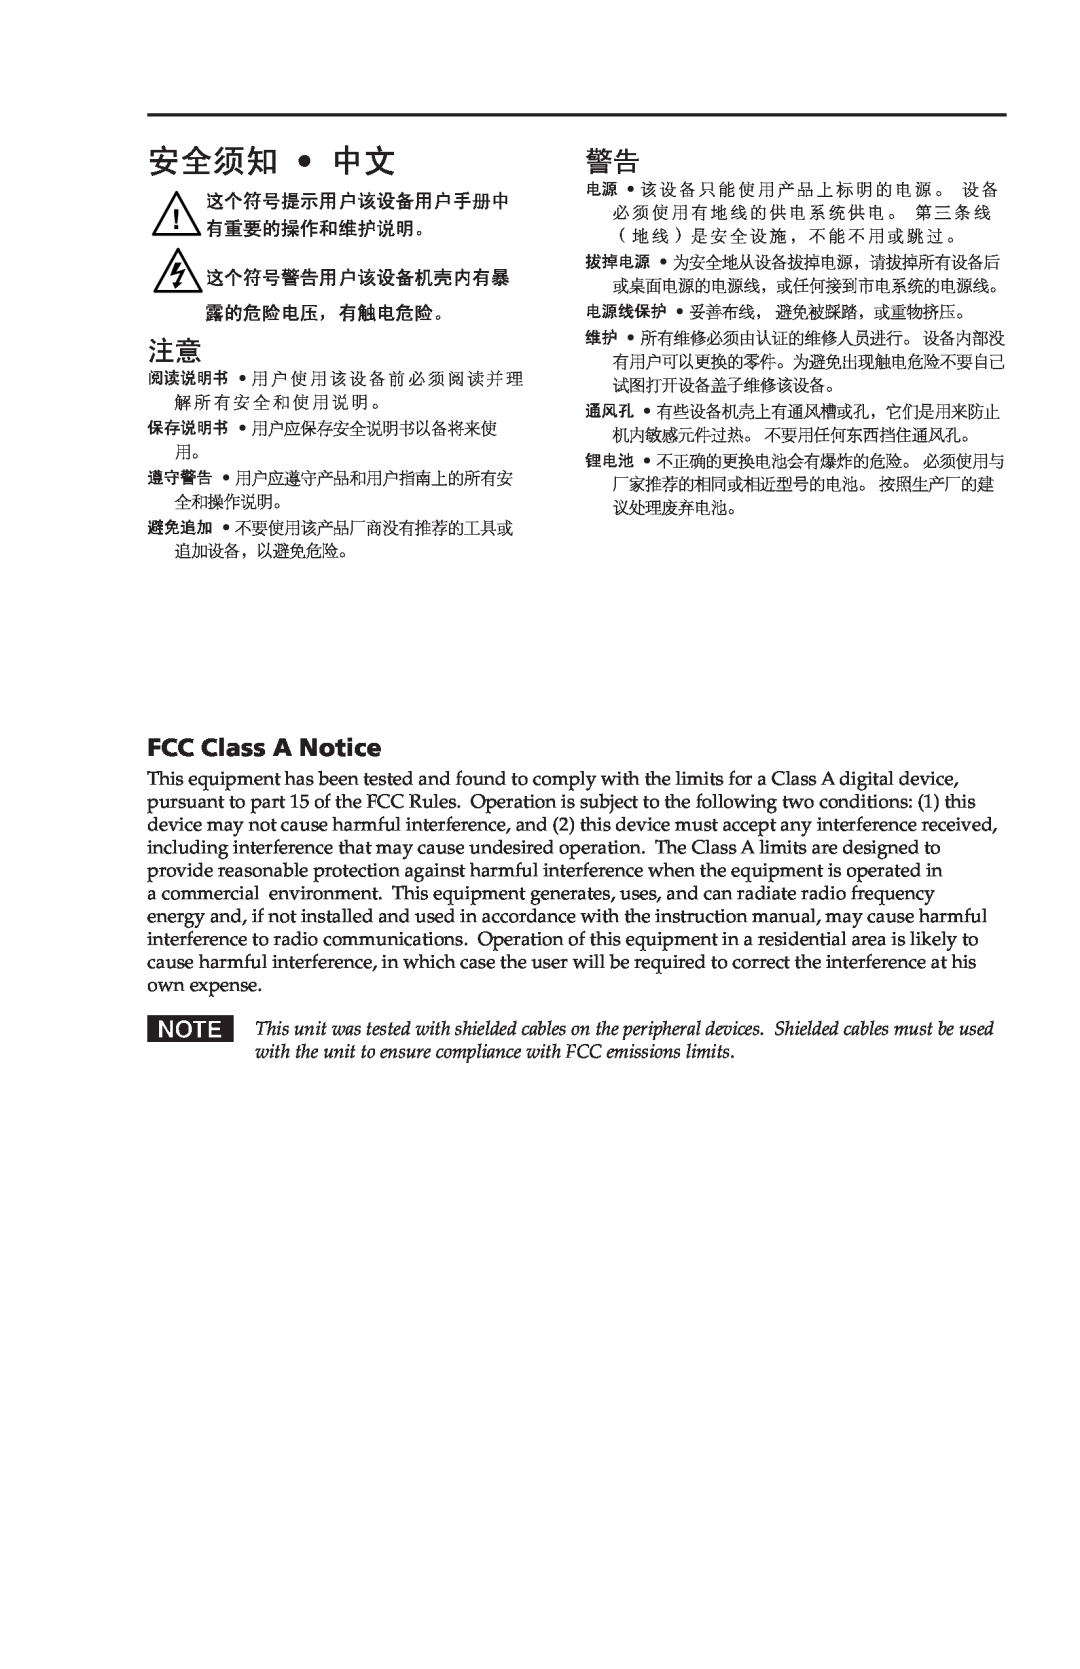 Extron electronic CIA111, CIA114F5 user manual 安全须知 中文, FCC Class A Notice 